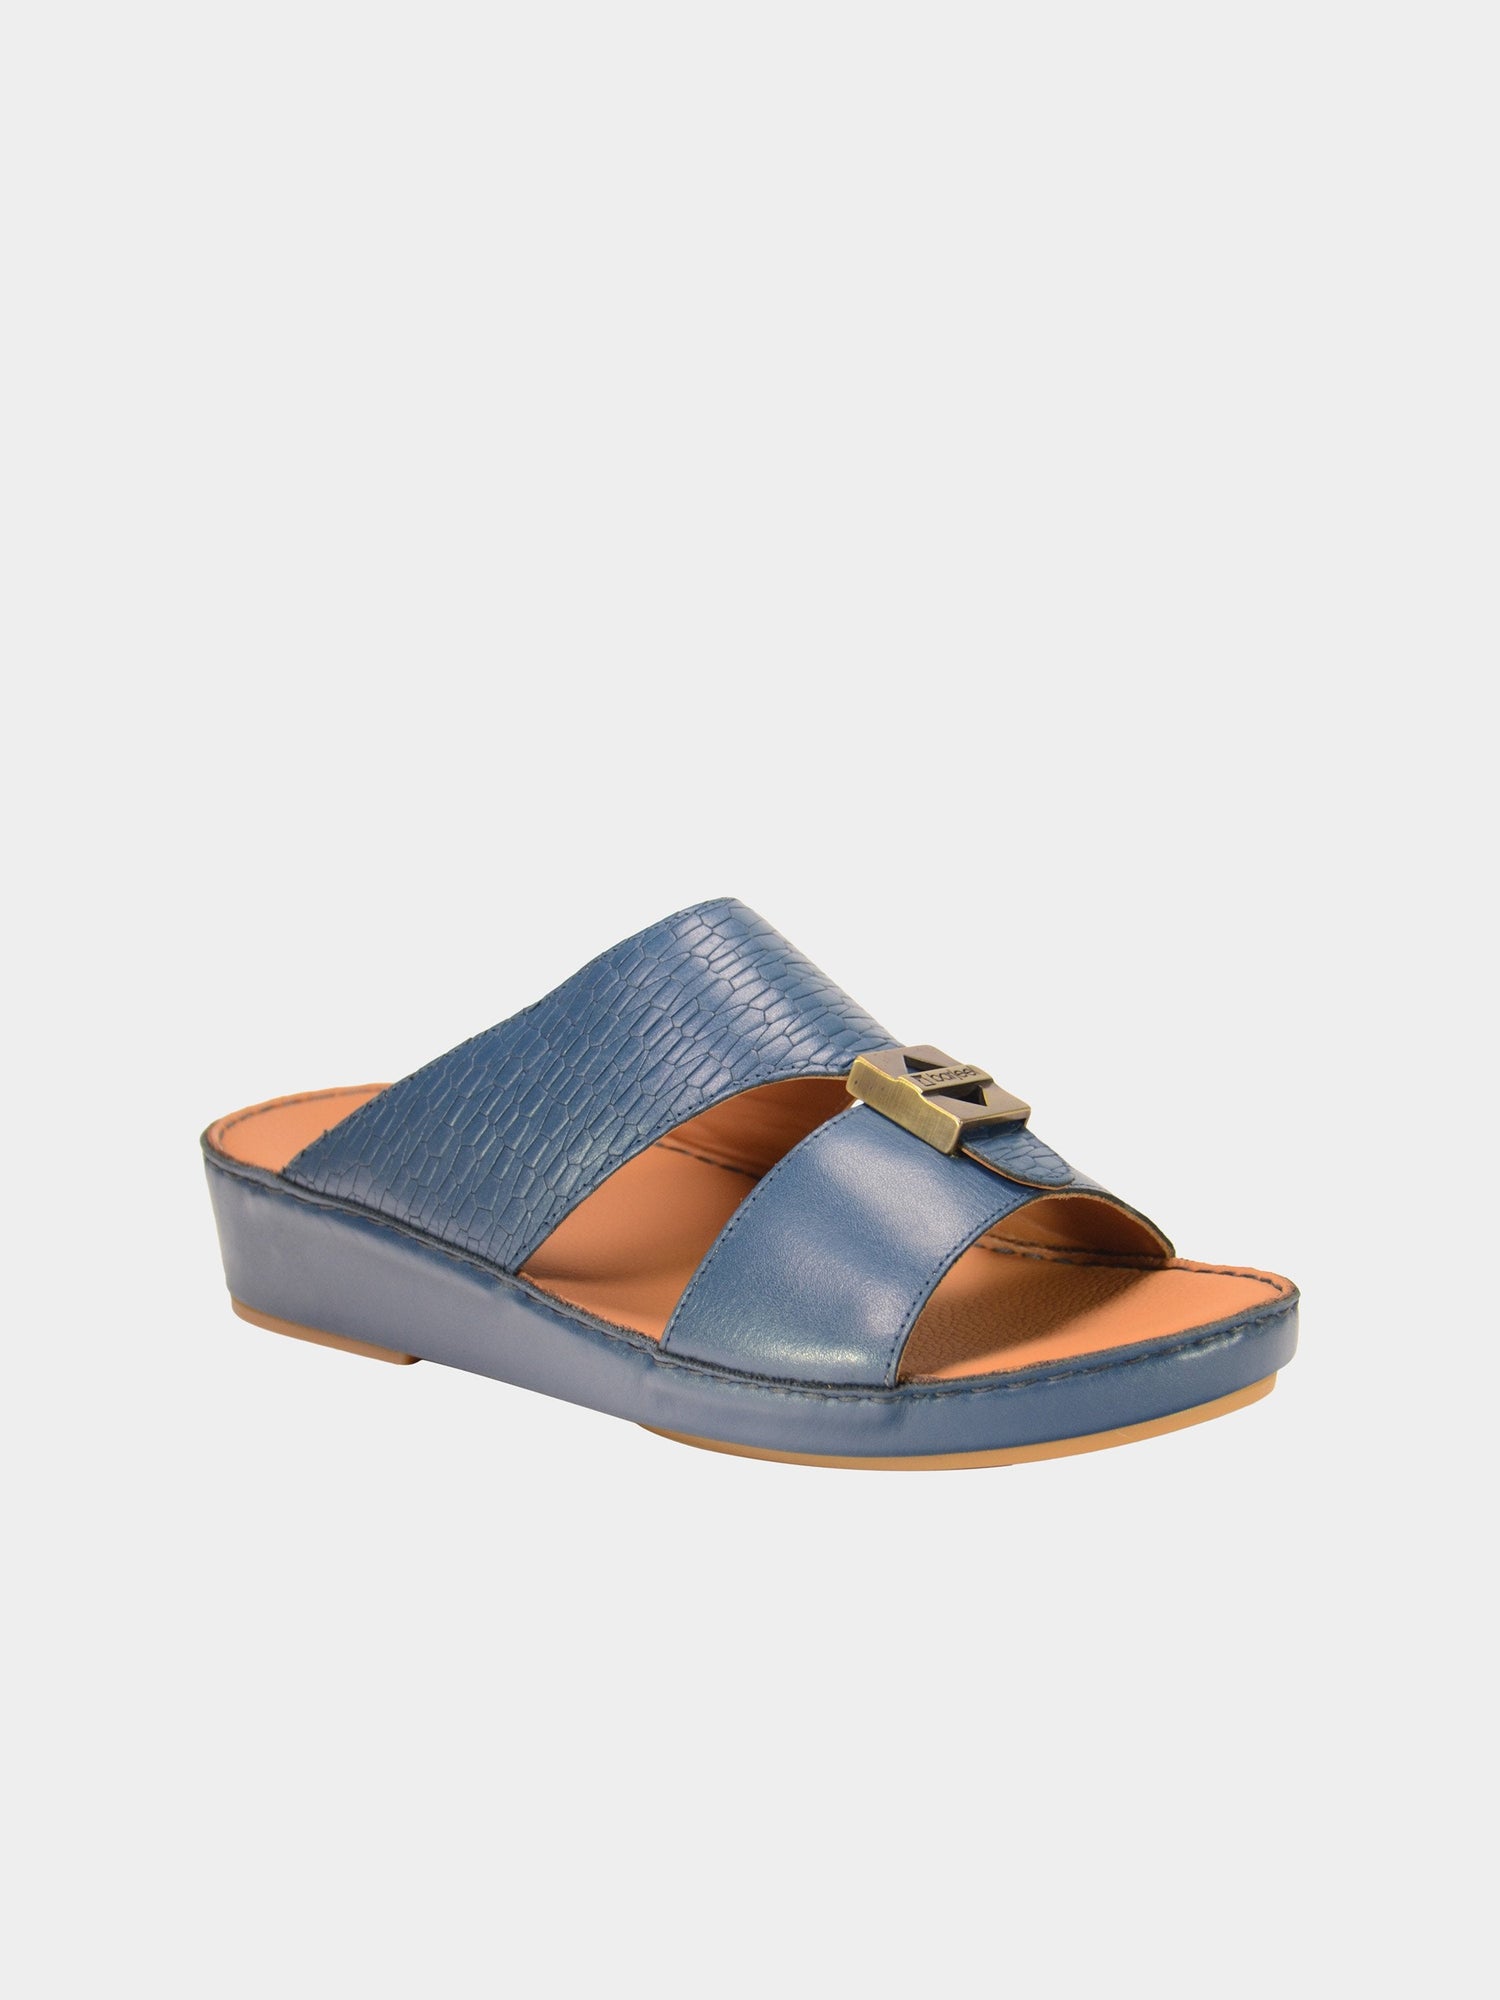 Barjeel Uno 001930 Croc Effect Arabic Leather Sandals